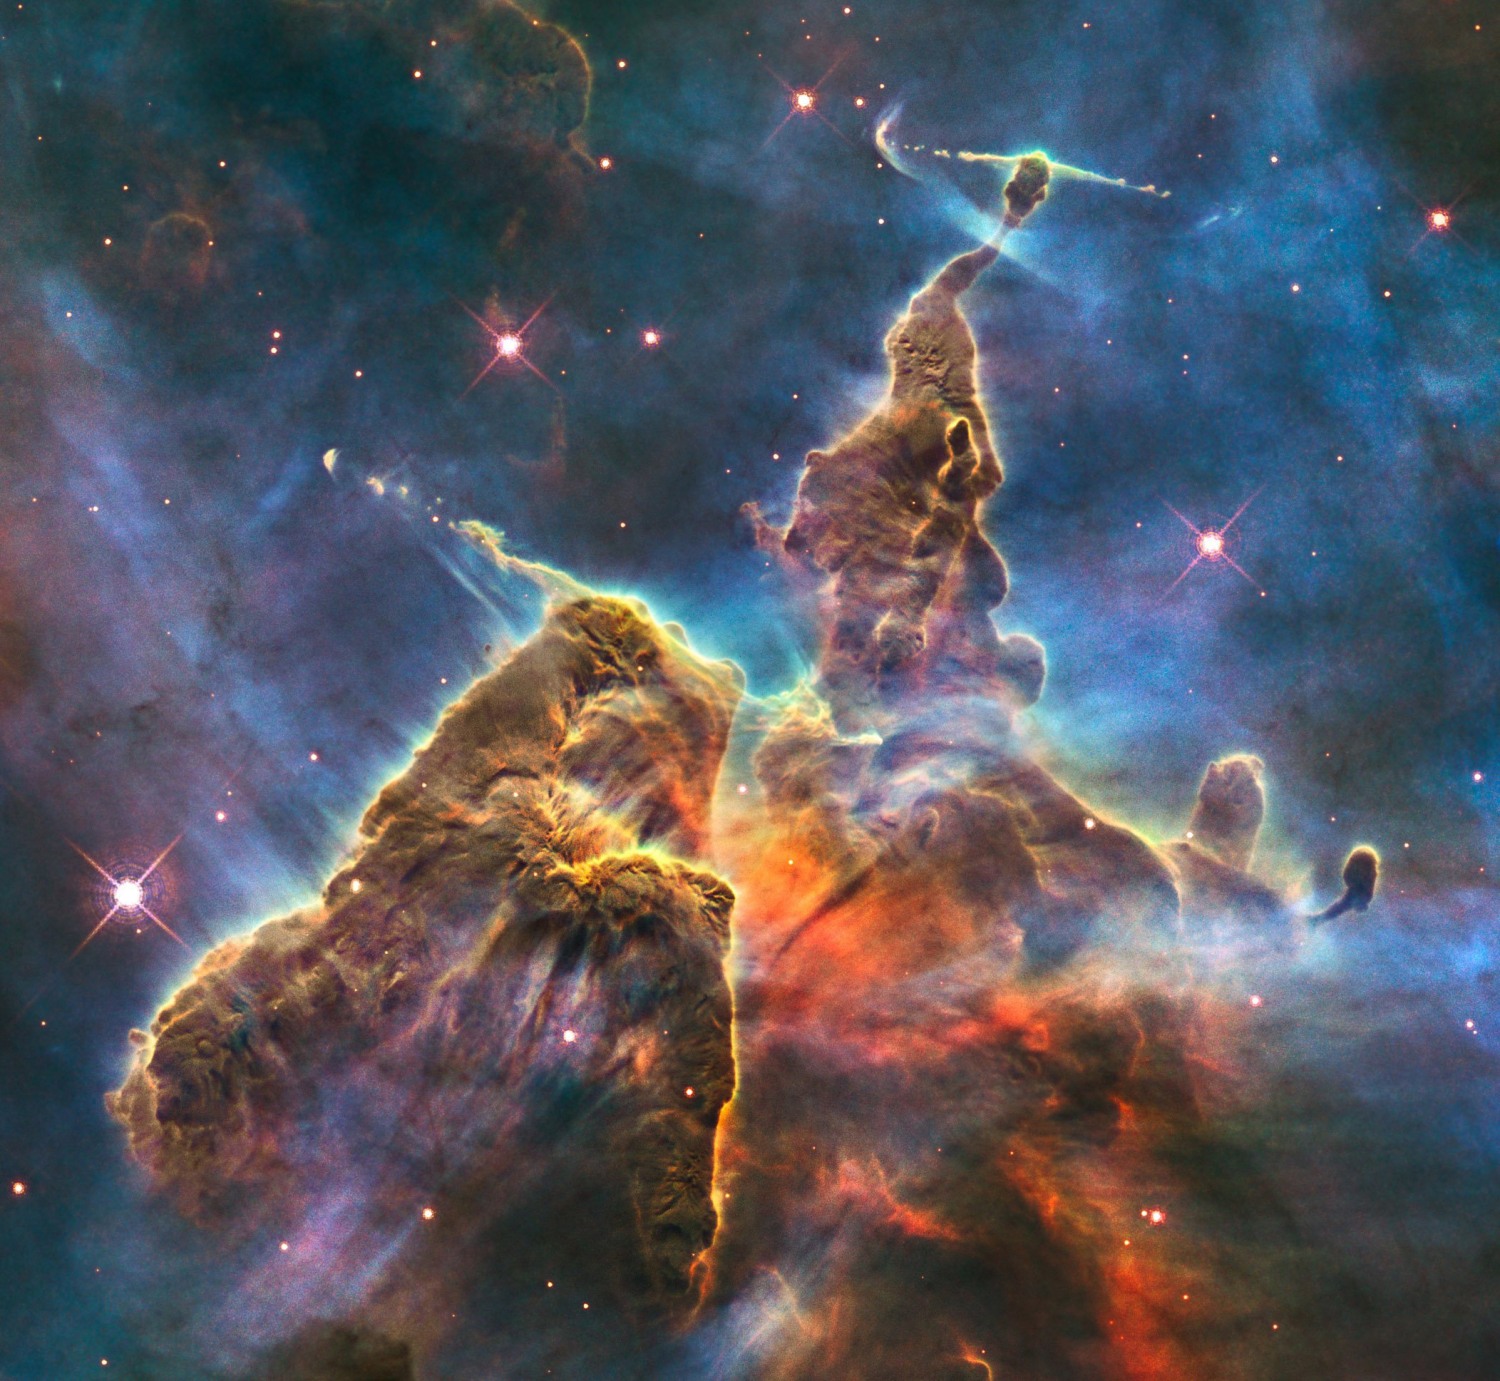 beweging Beven Prestatie Hubble Space Telescope celebrates 28 years of mind-blowing space pictures